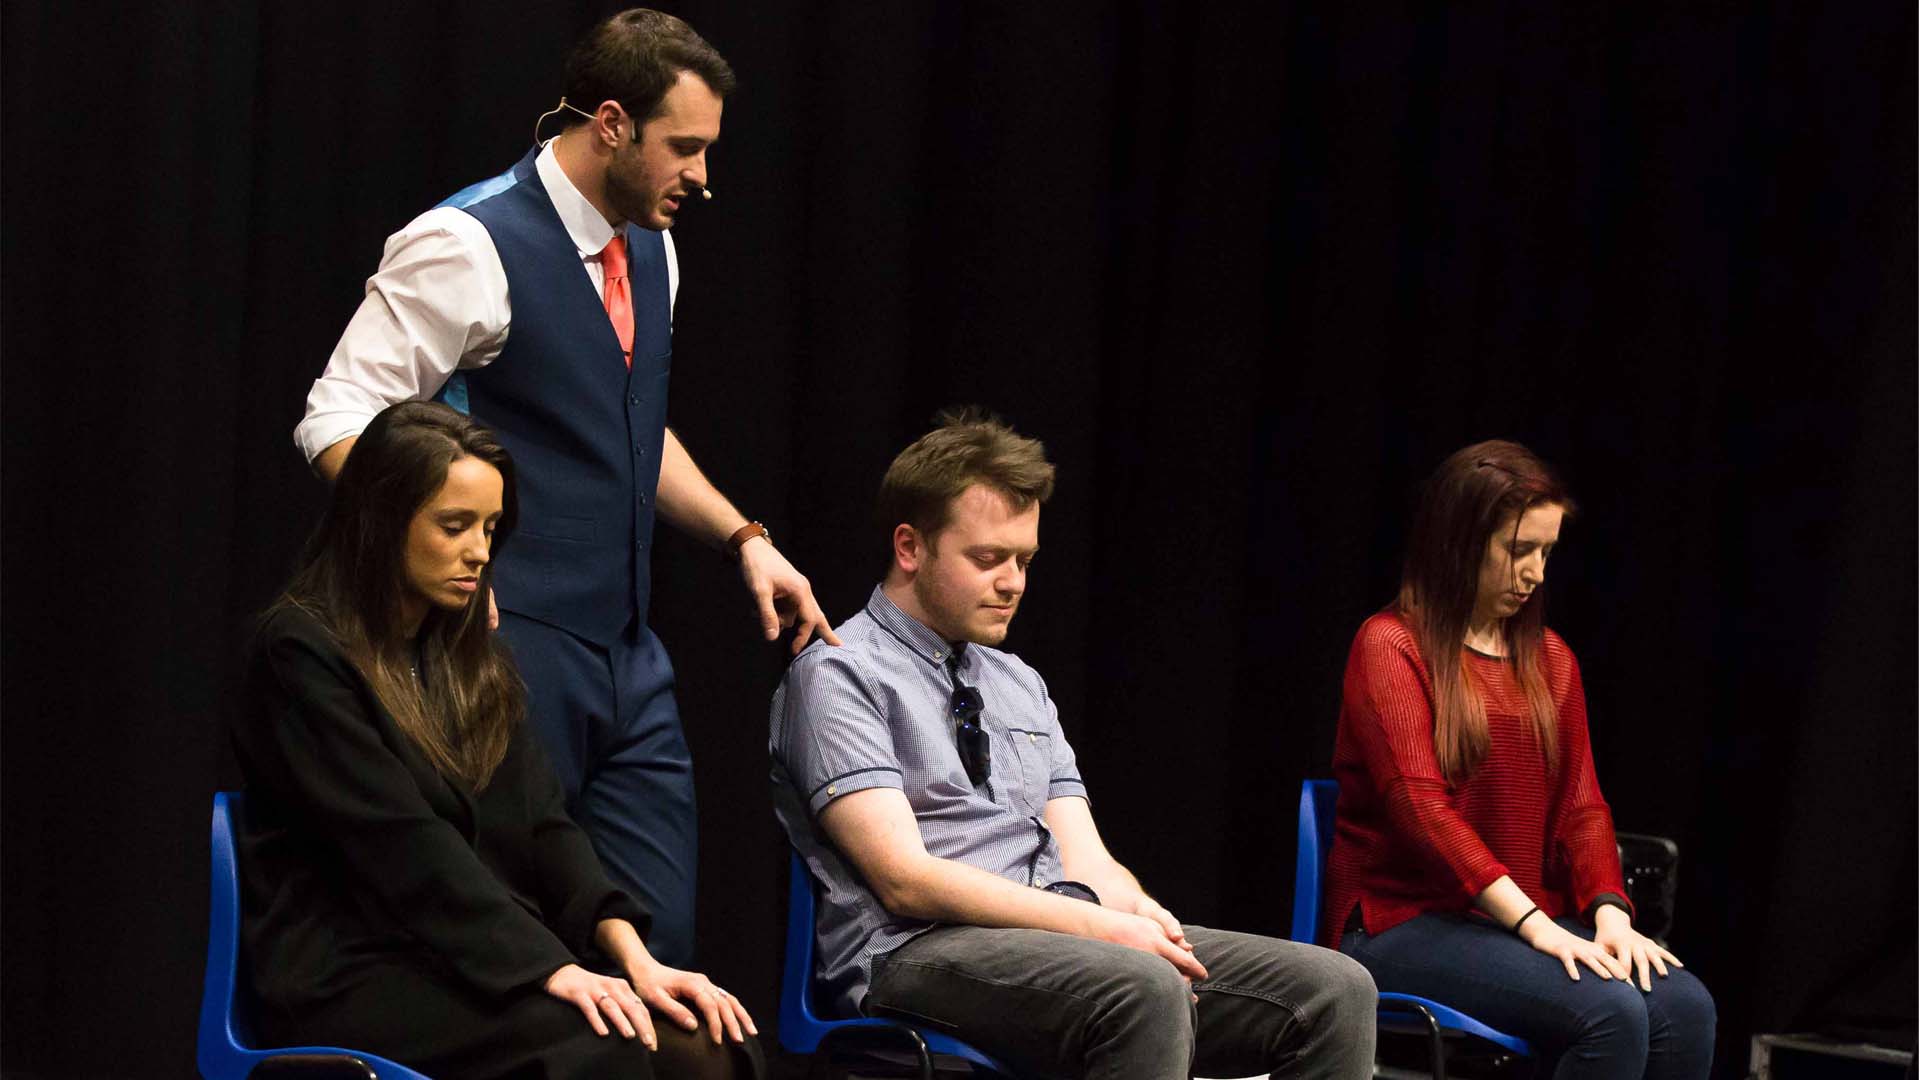 Edinburgh fringe particpants hypnotised on stage in mind games